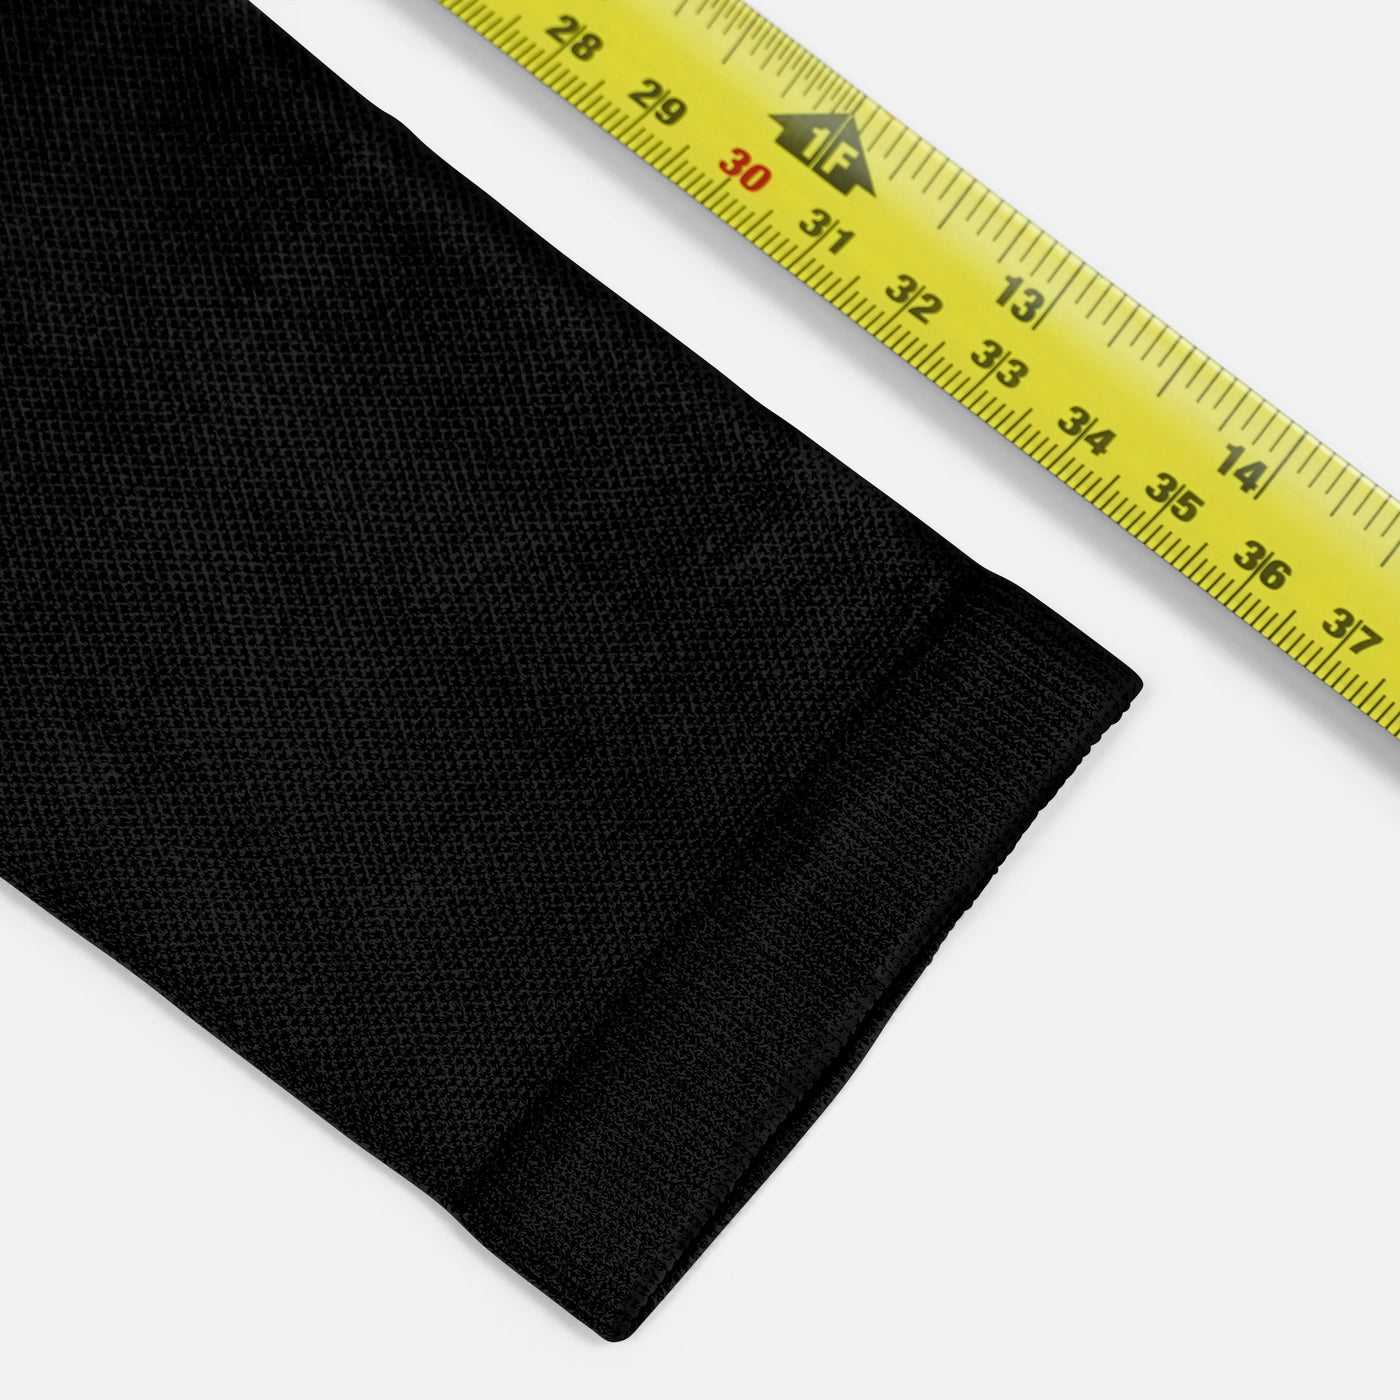 Basic Black One Size Fits All Football Arm Sleeve